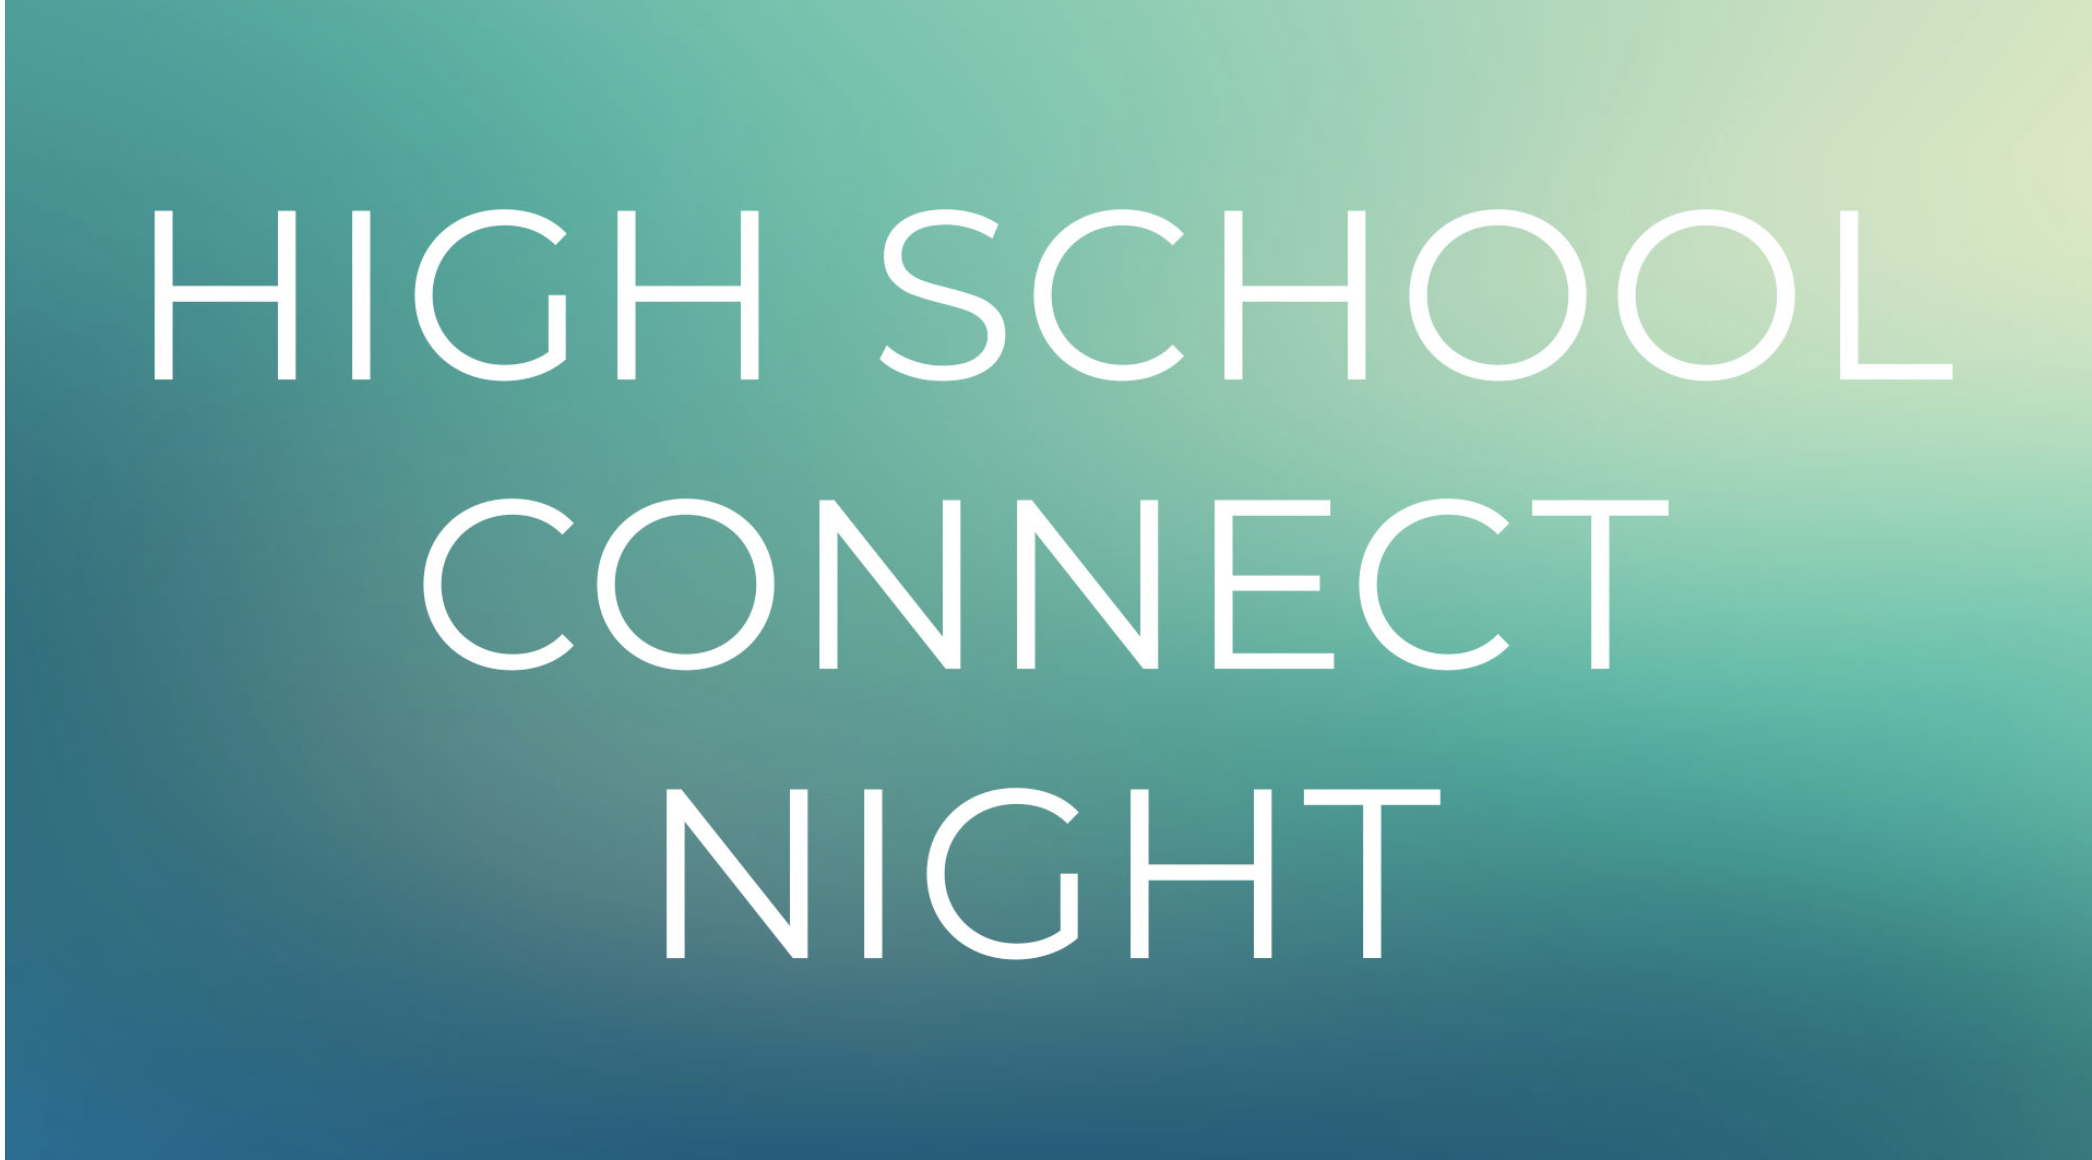 Cottonwood Creek Church - High School Connect Night: Arcade92